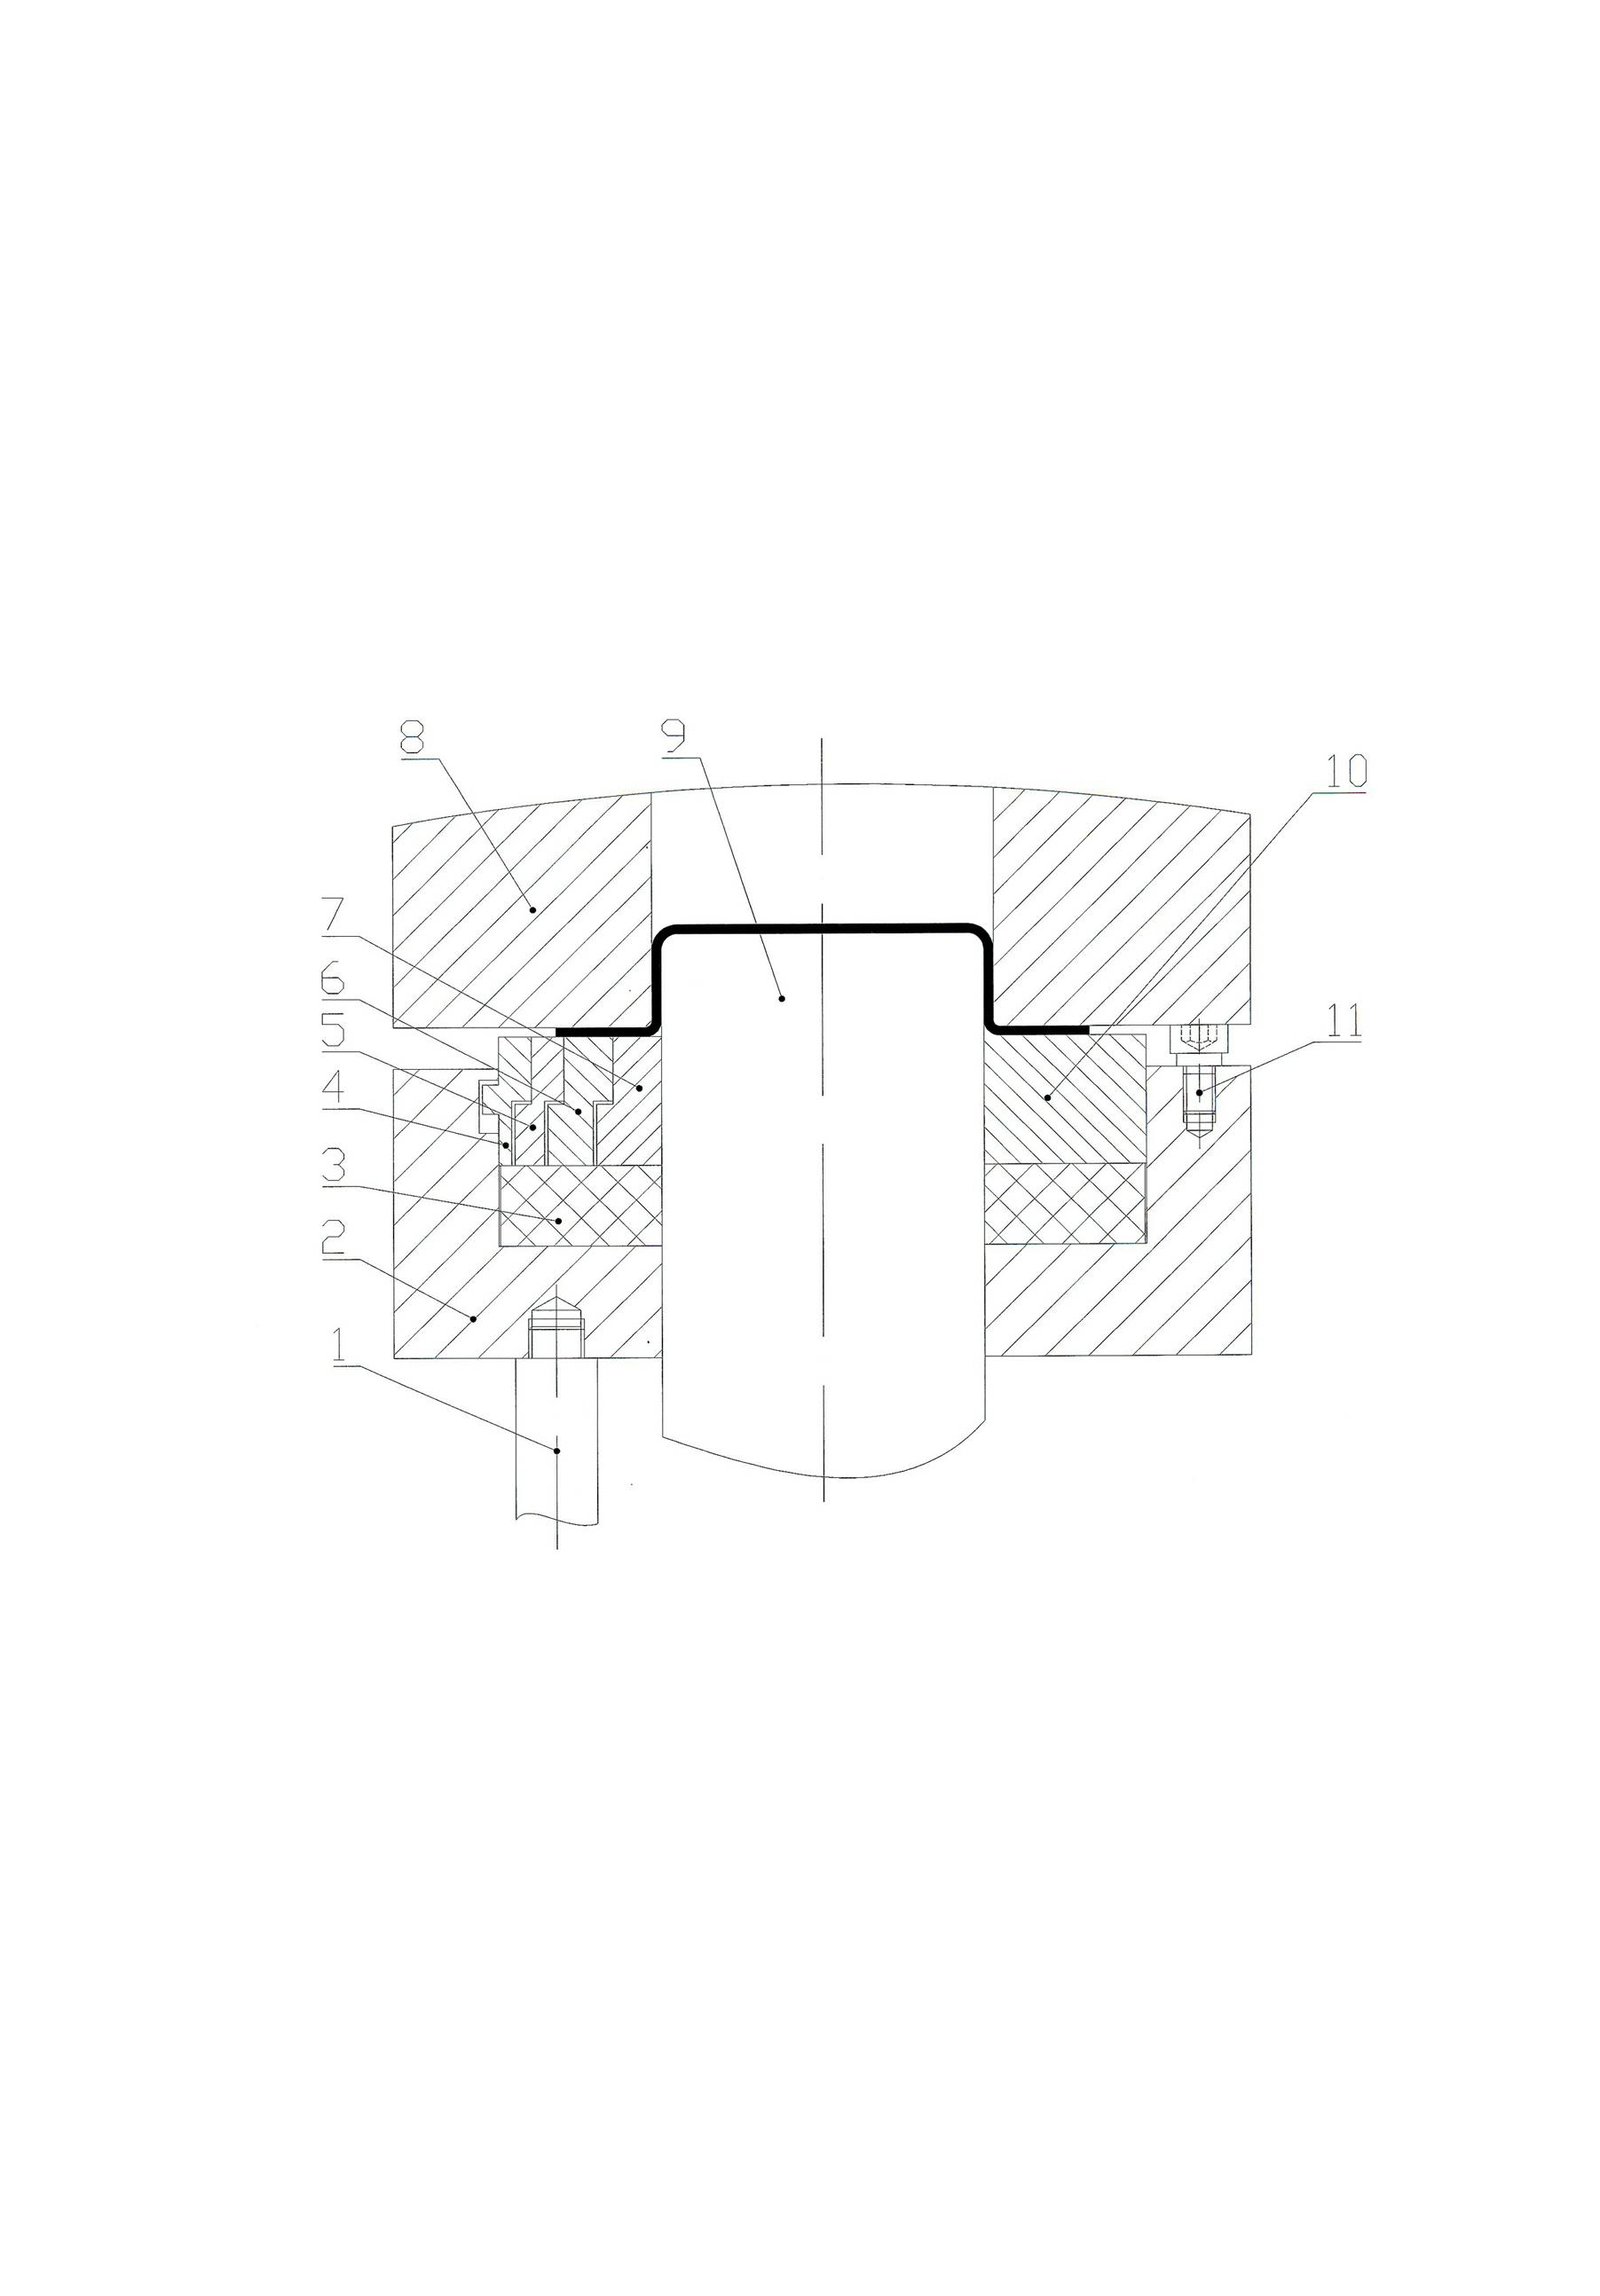 Multi-blank-holder radial blocking-blank pressing method applied to nonaxisymmetrical piece